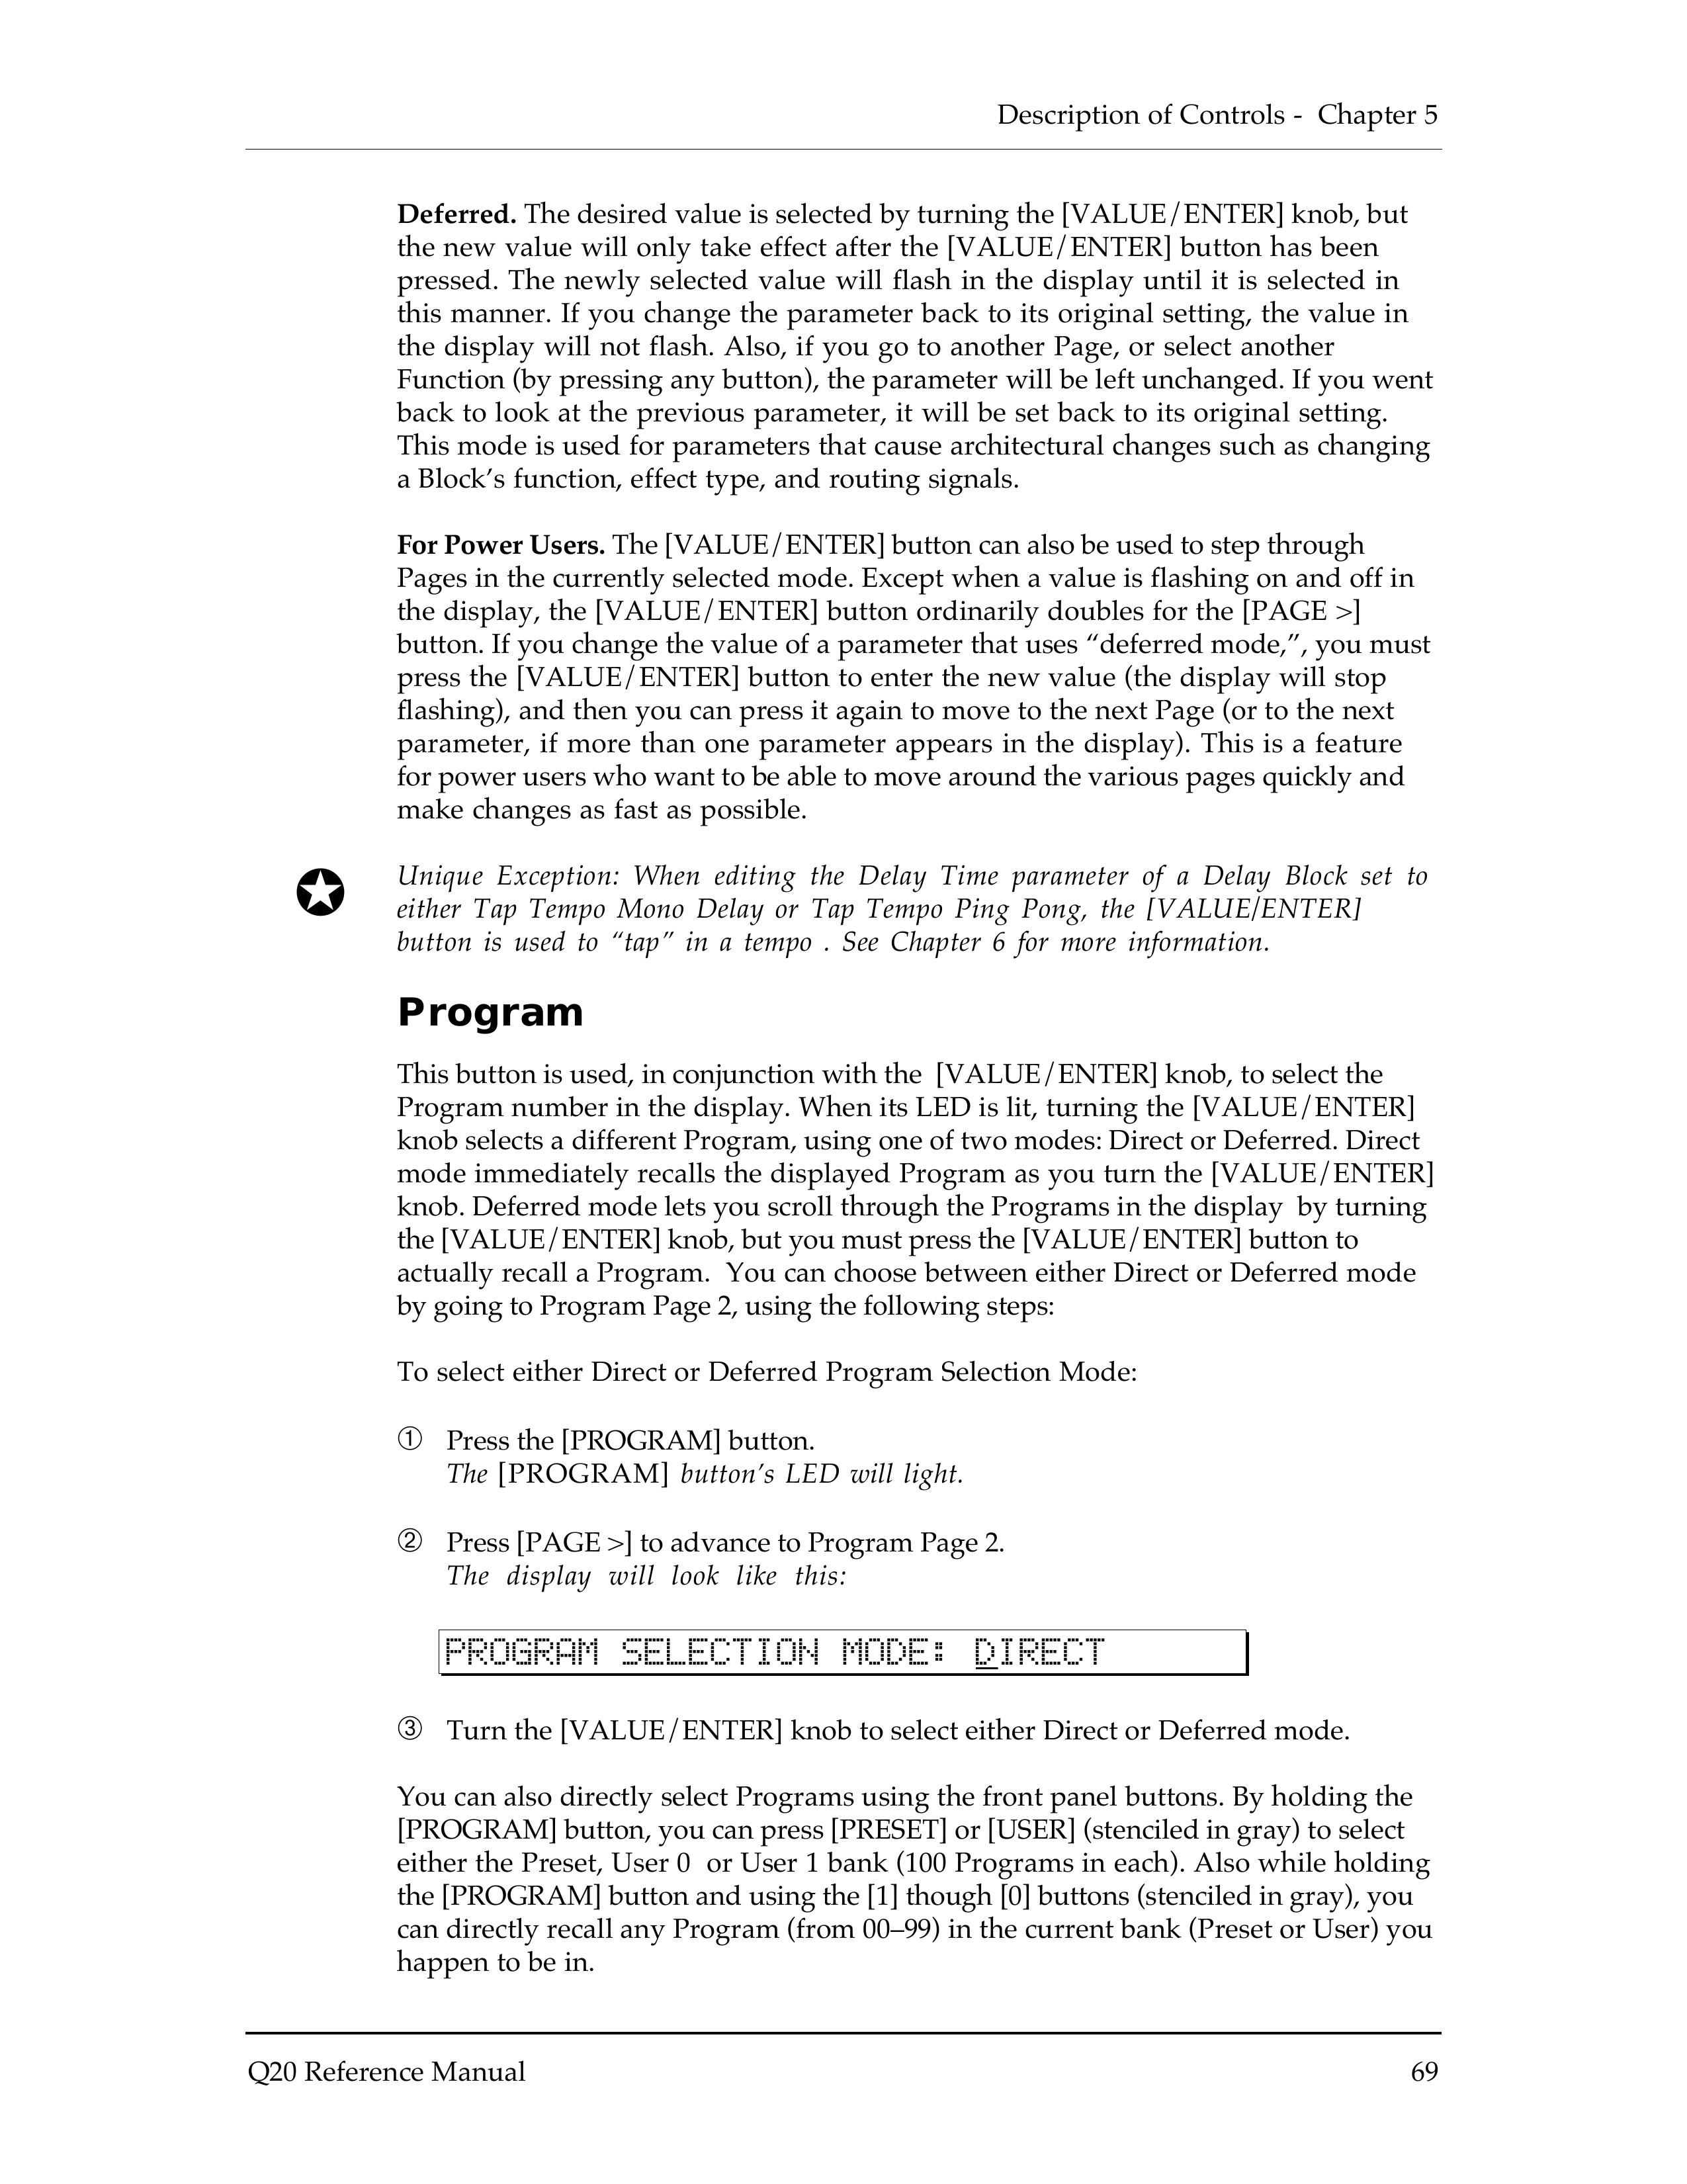 Alesis Q20 DJ Equipment User Manual (Page 71)